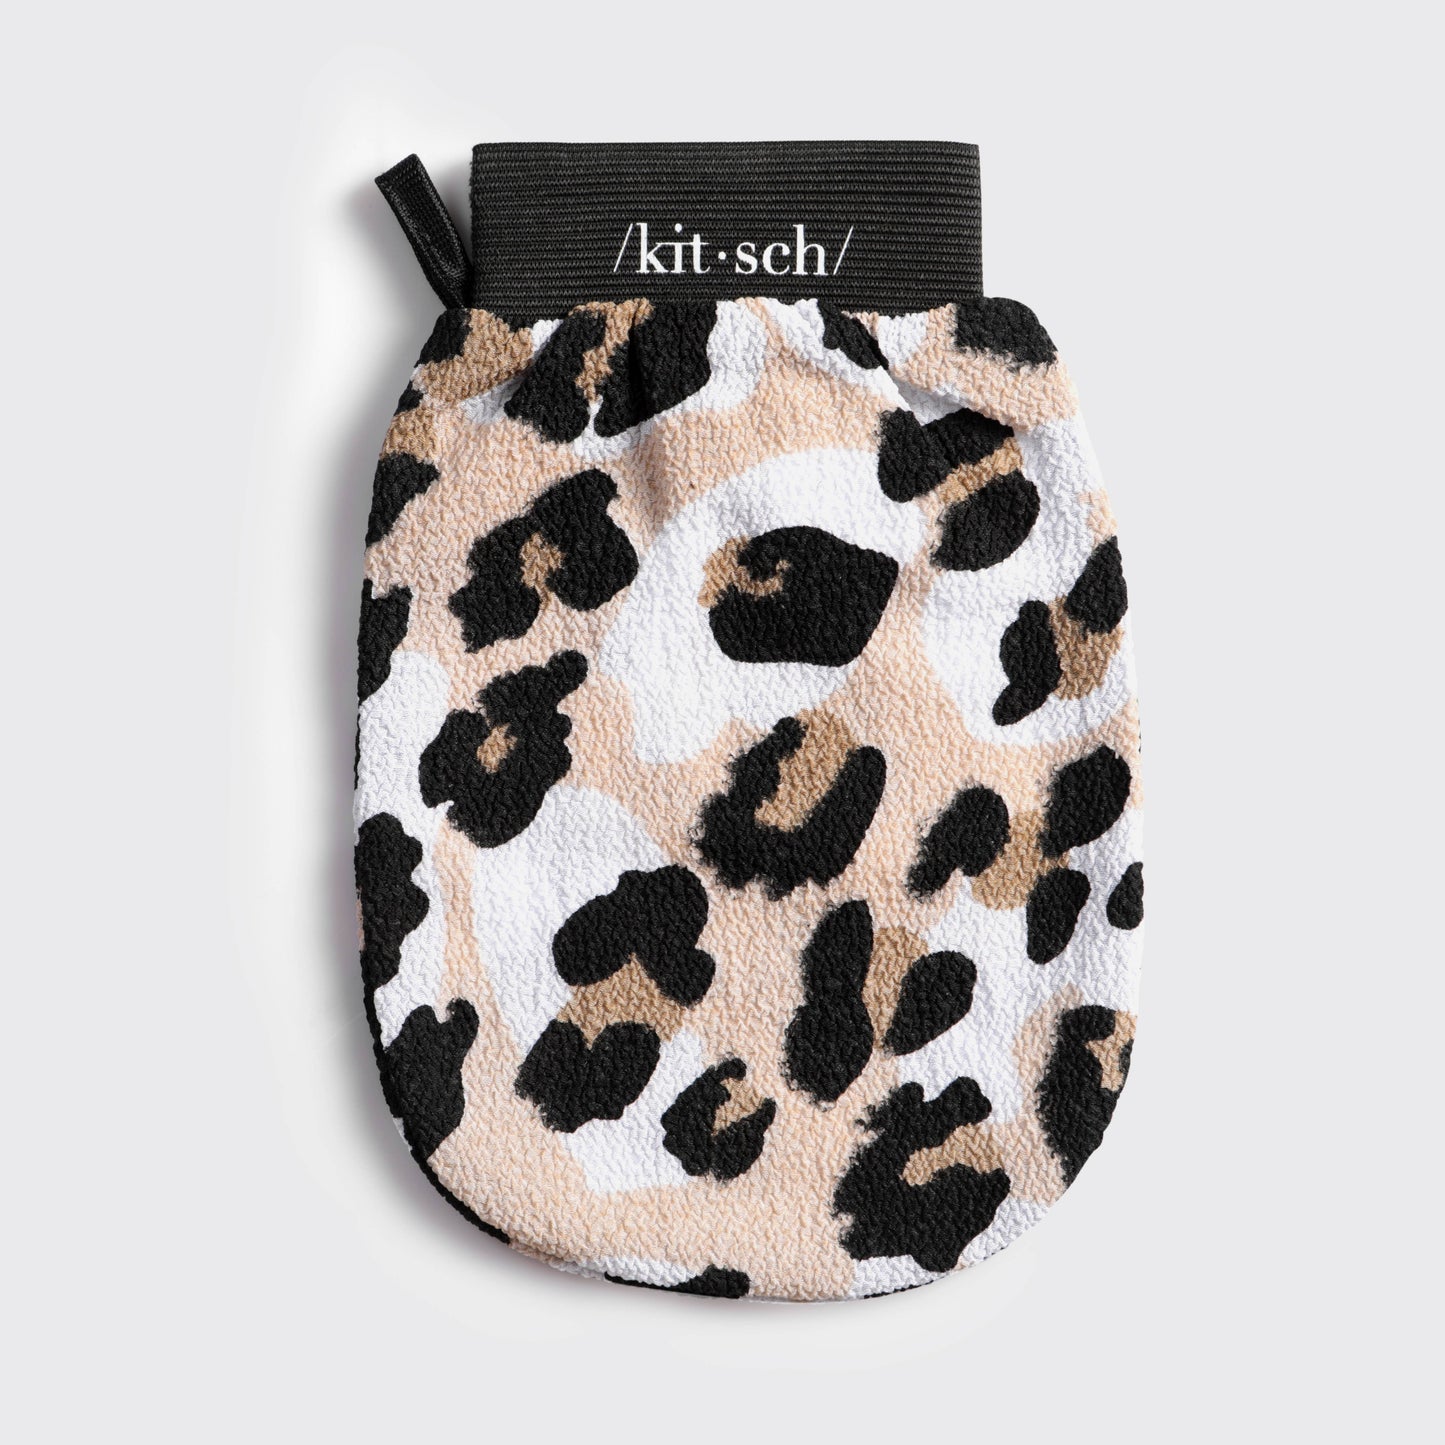 Kitsch- Eco-Friendly Exfoliating Glove - Leopard